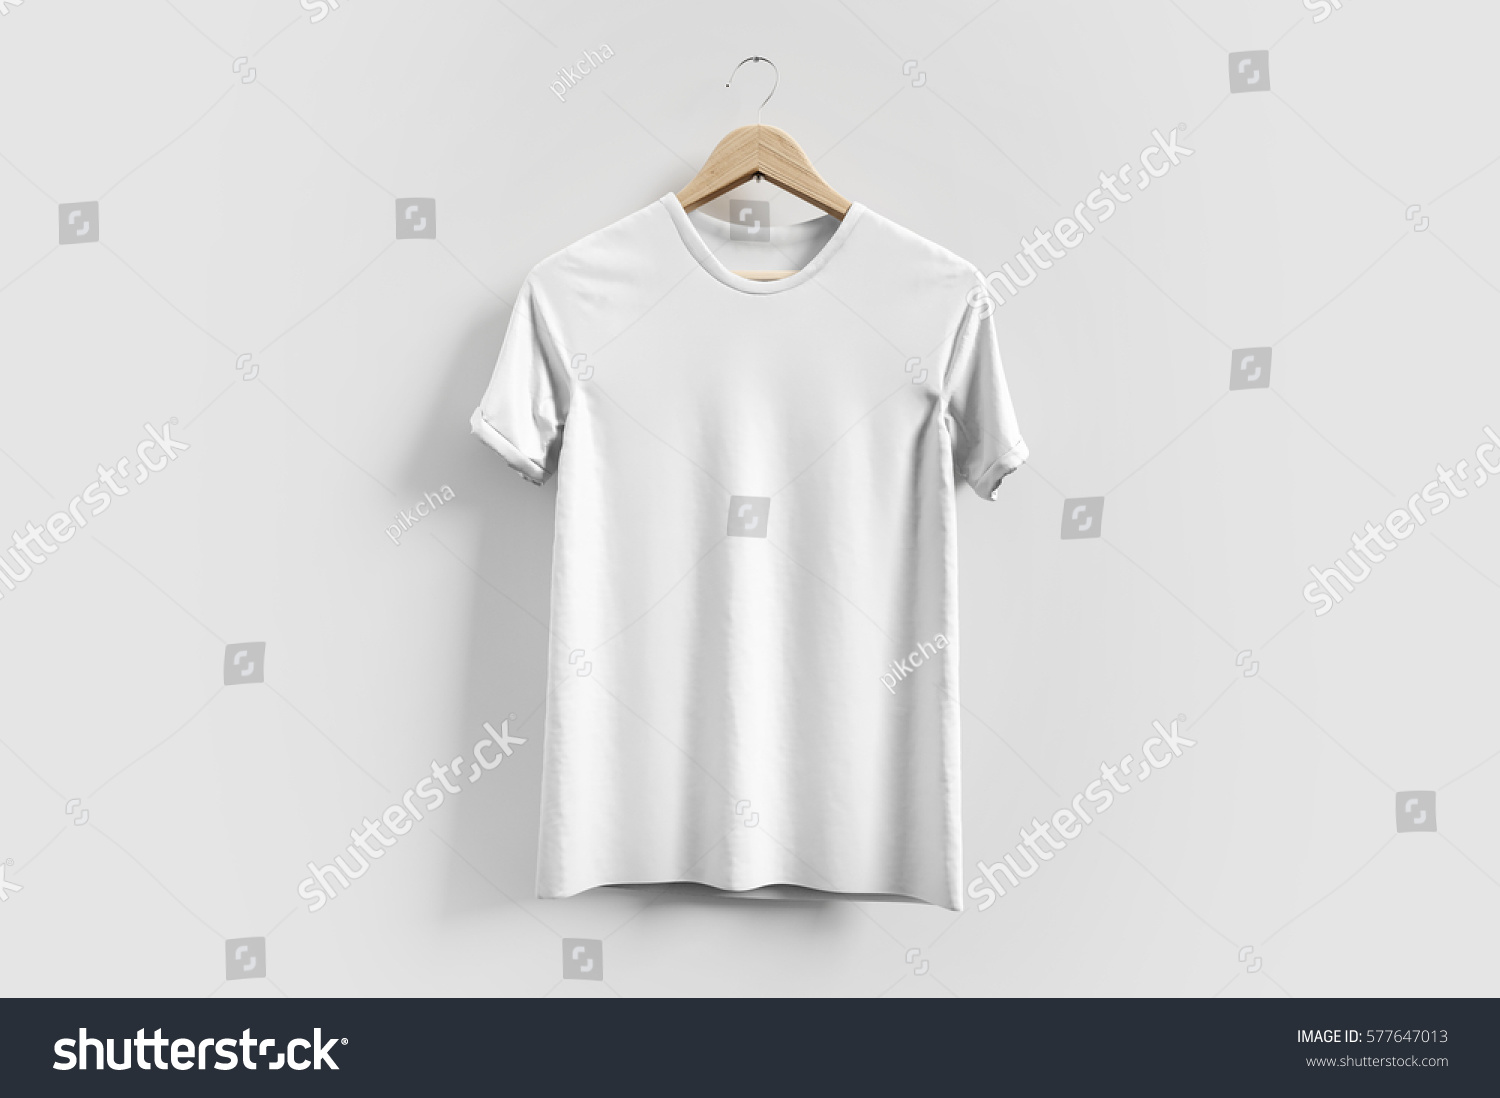 Download Tshirt Mockup Stock Photo 577647013 - Shutterstock